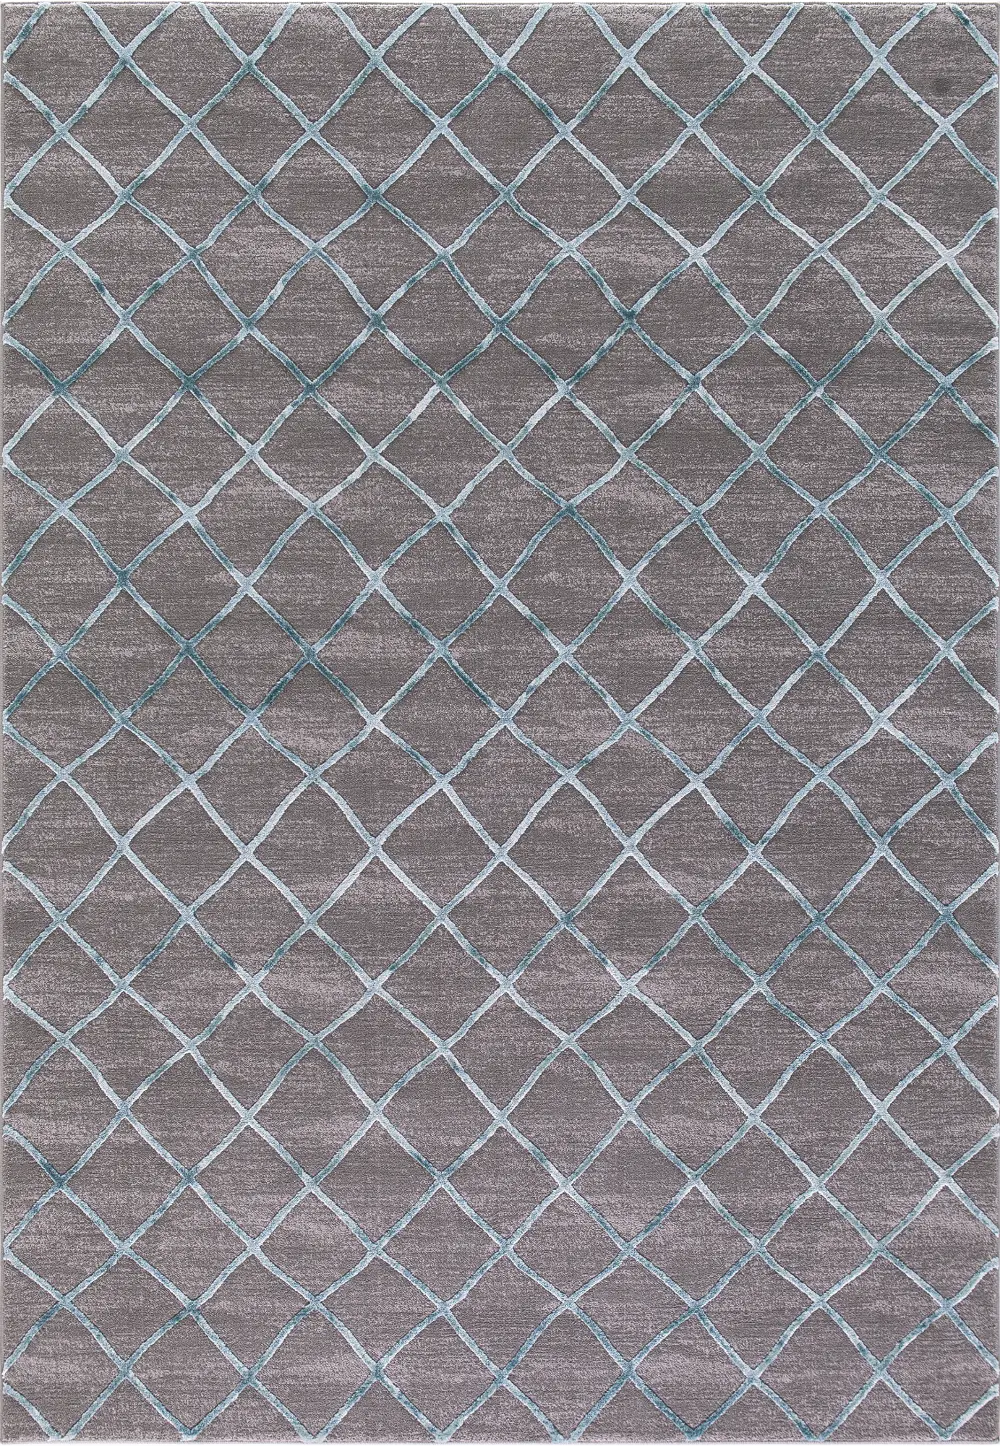 5 x 7 Medium Gray, Ivory and Blue Rug - Thema-1